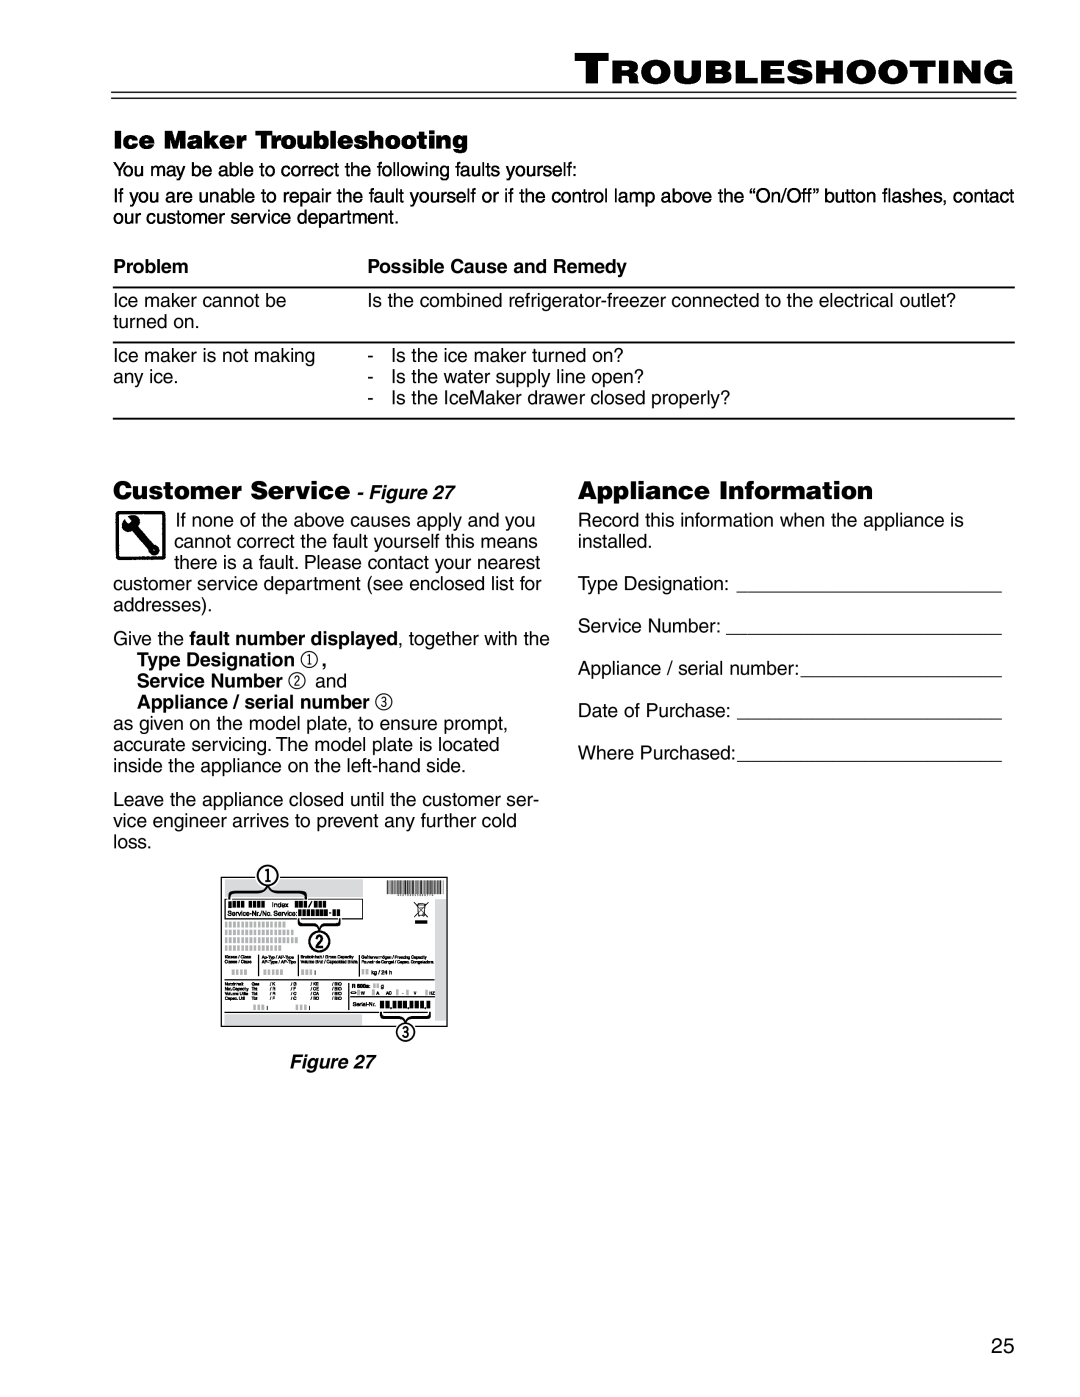 Liebherr CS 1660 manual Ice Maker Troubleshooting, Customer Service - Figure, Appliance Information 